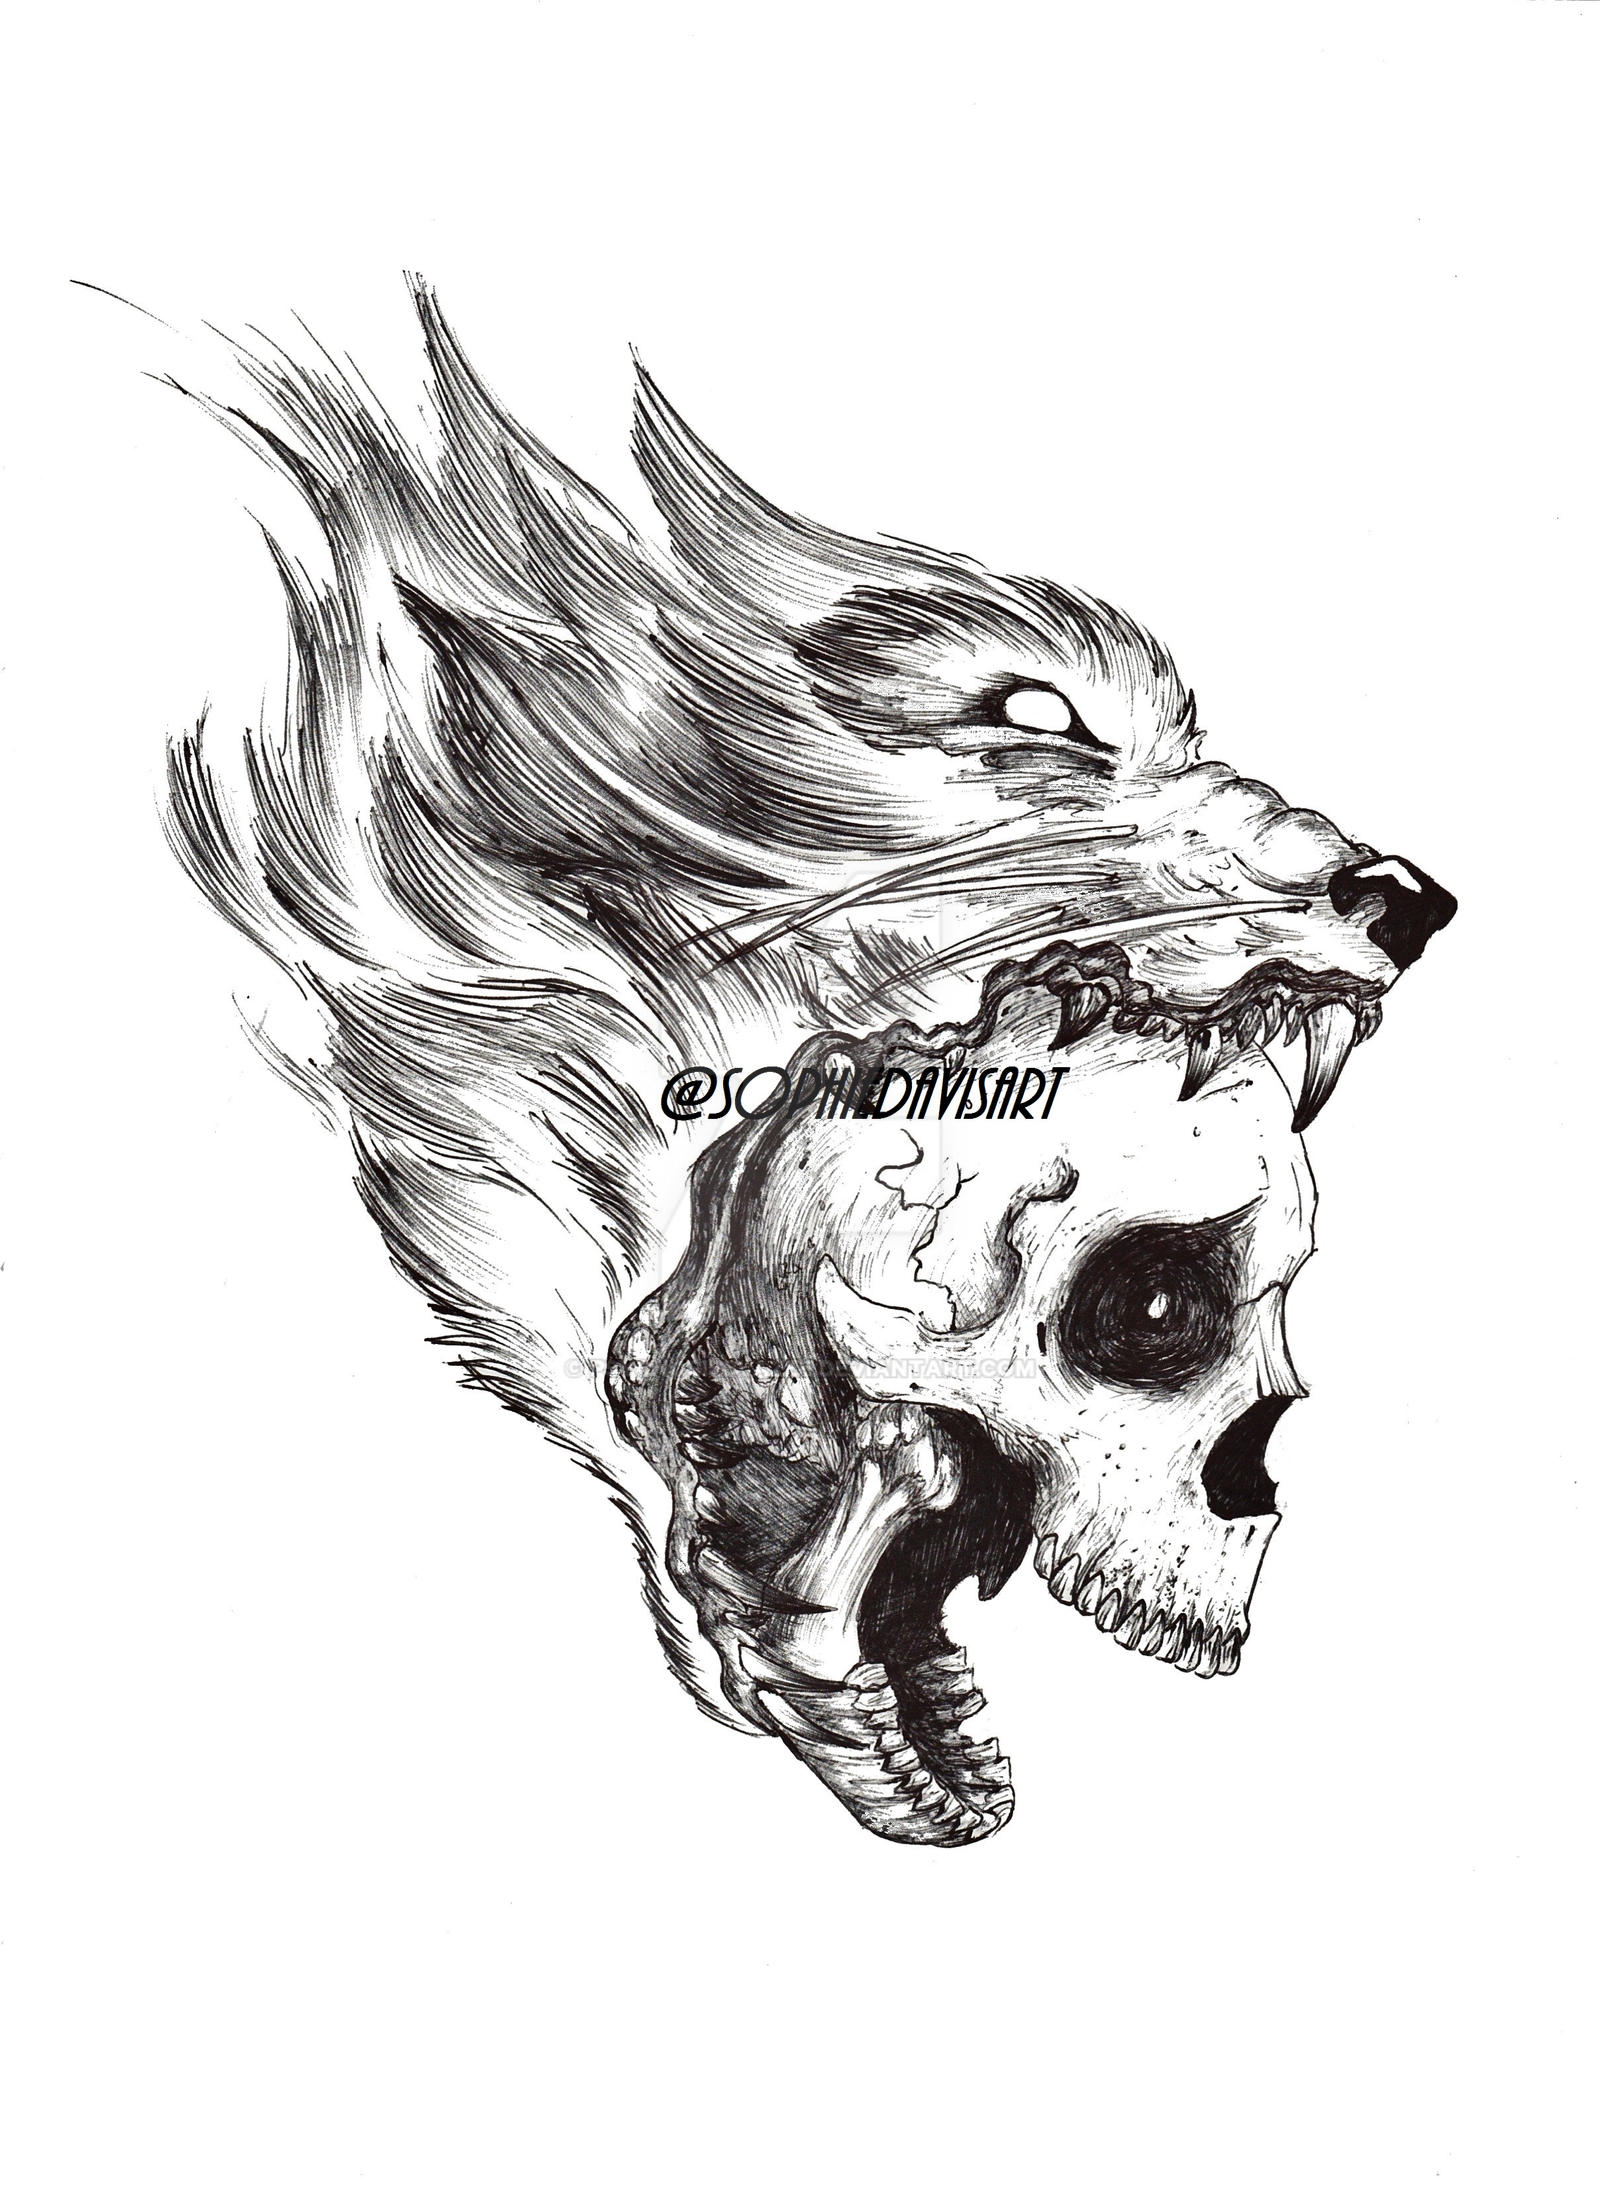 WOLF and SKULL Illustration Print by psychosisblazee on DeviantArt